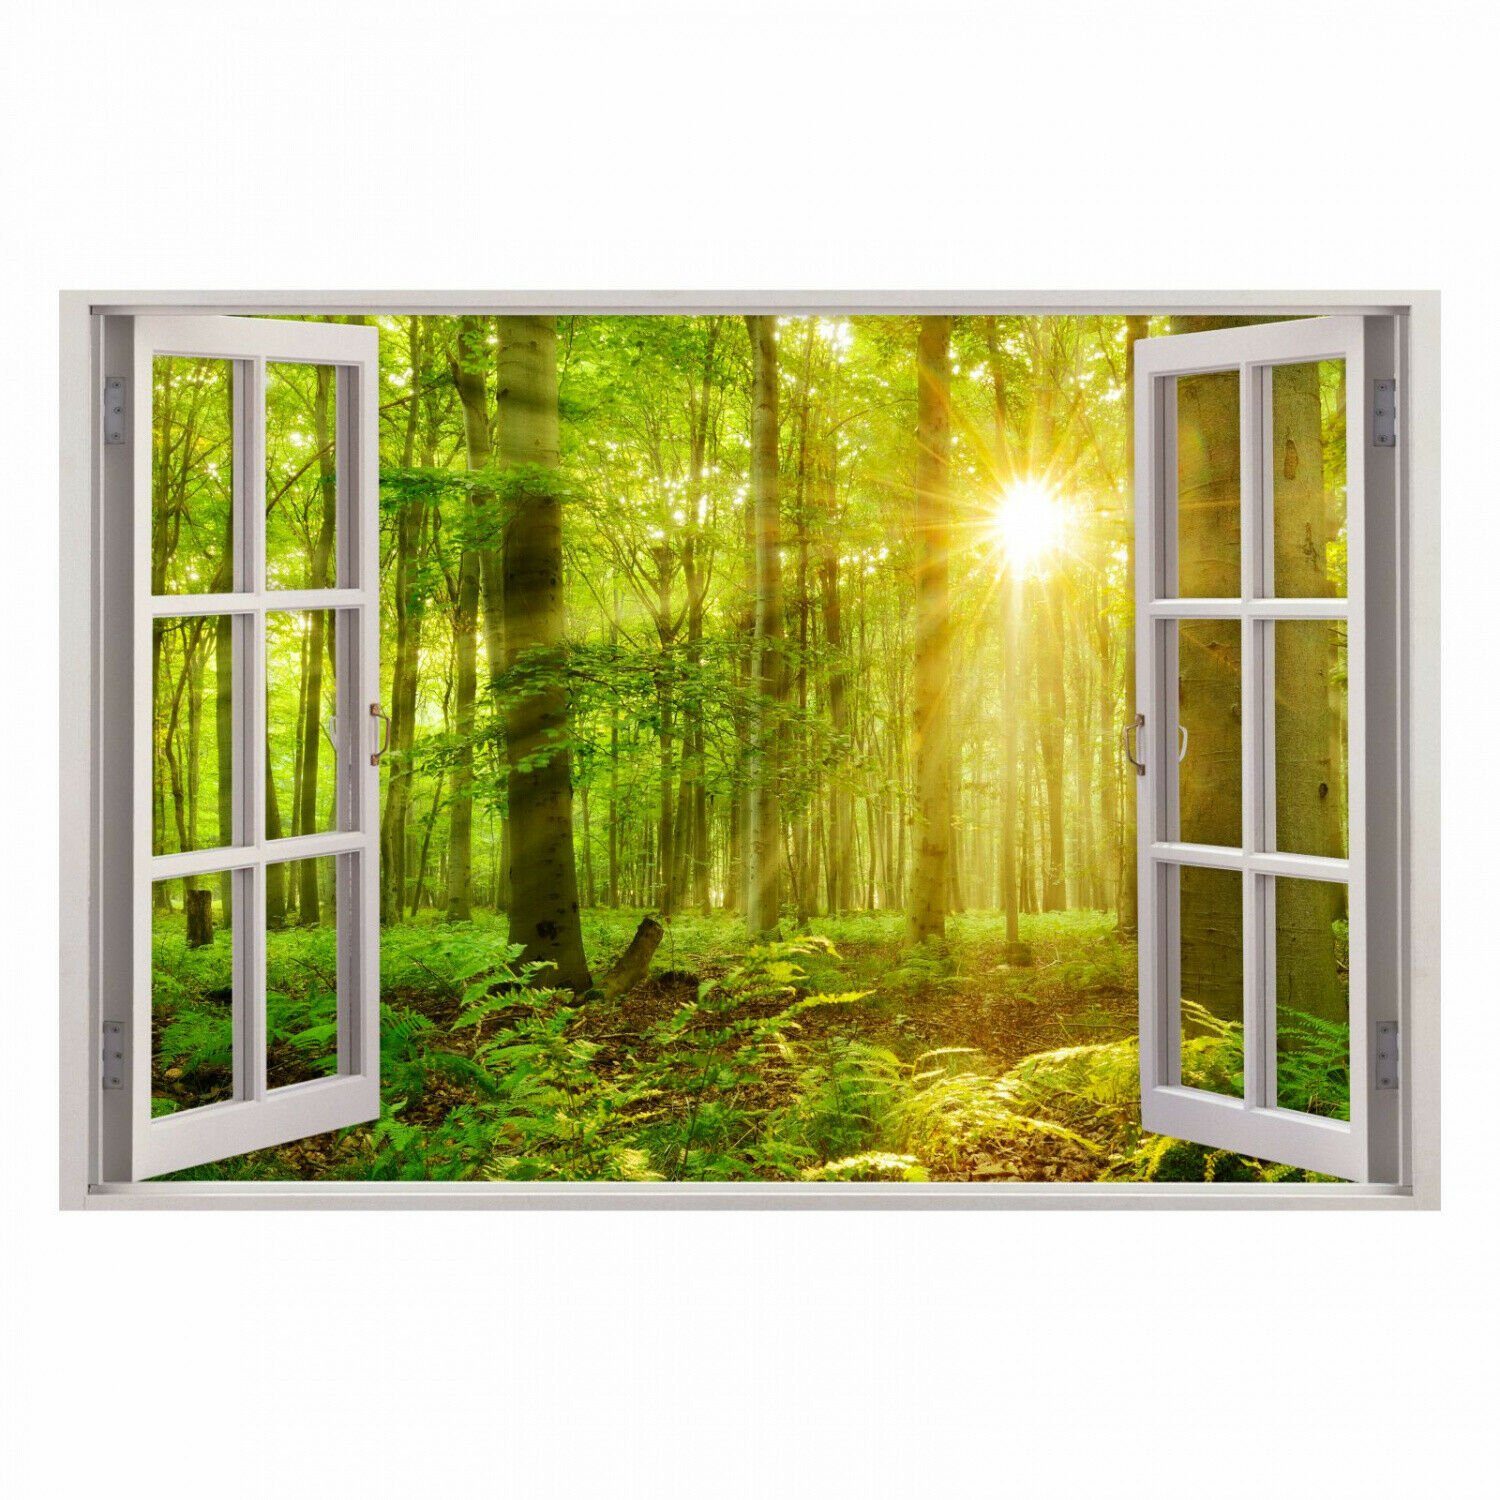 nikima Wandtattoo 216 Fenster - grüner Wald 2 (PVC-Folie), in 5 vers. Größen